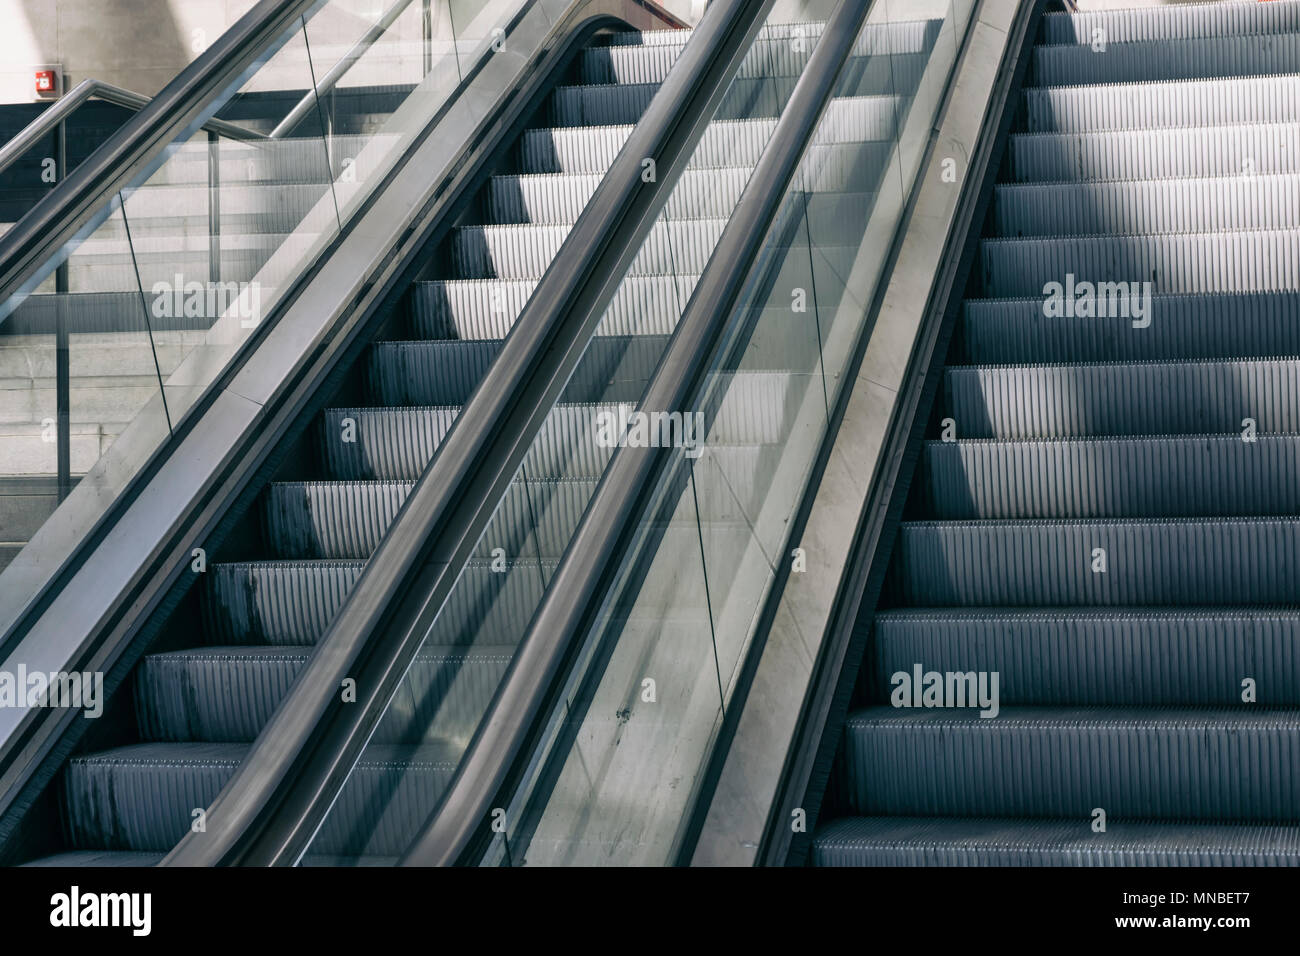 Berlin, Germany, May 07, 2018: Staircase and escalator Stock Photo